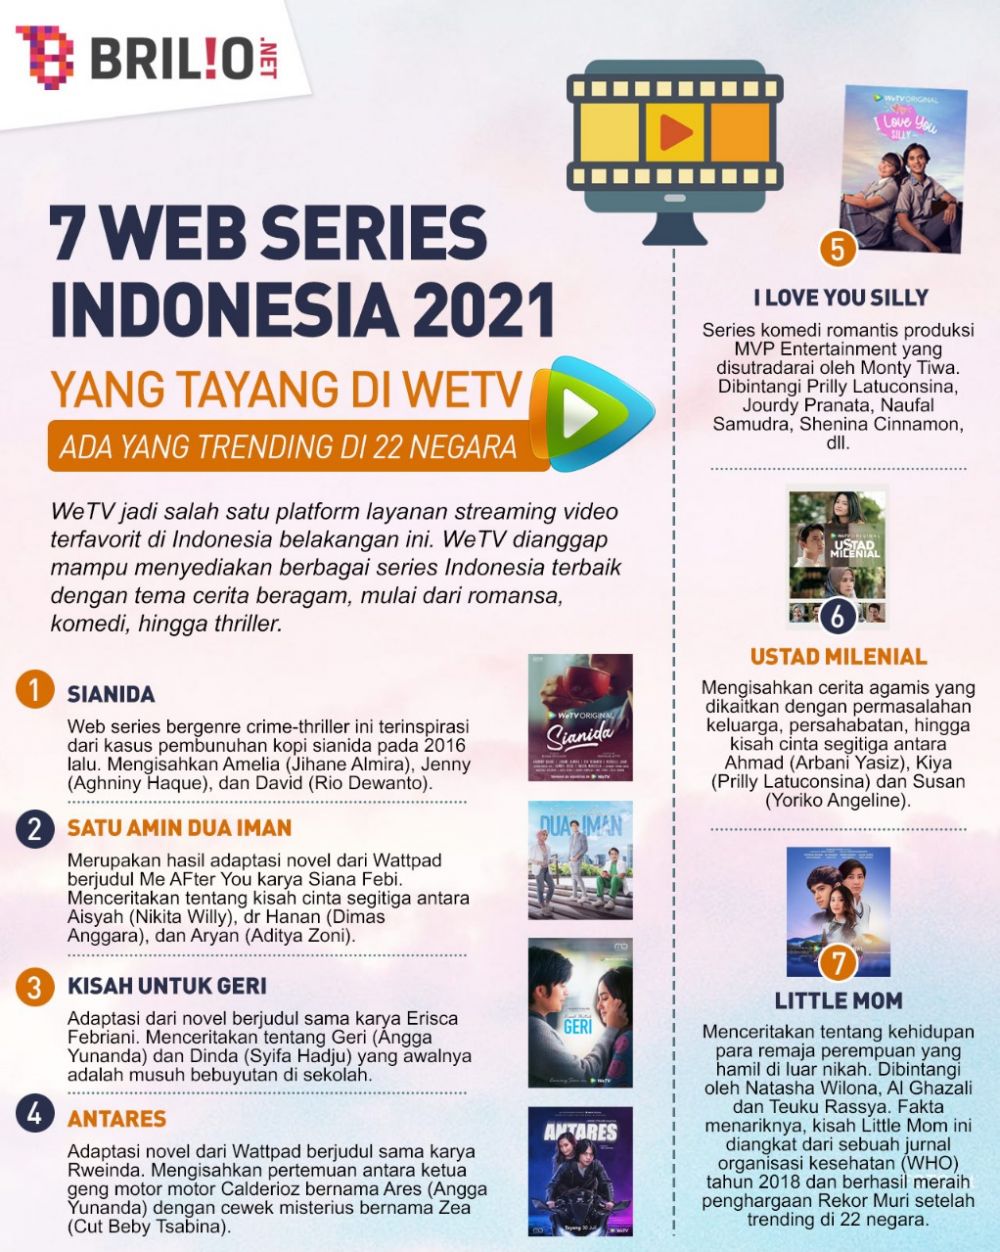 7 Web series Indonesia 2021 di WeTV, Little Mom trending 22 negara 